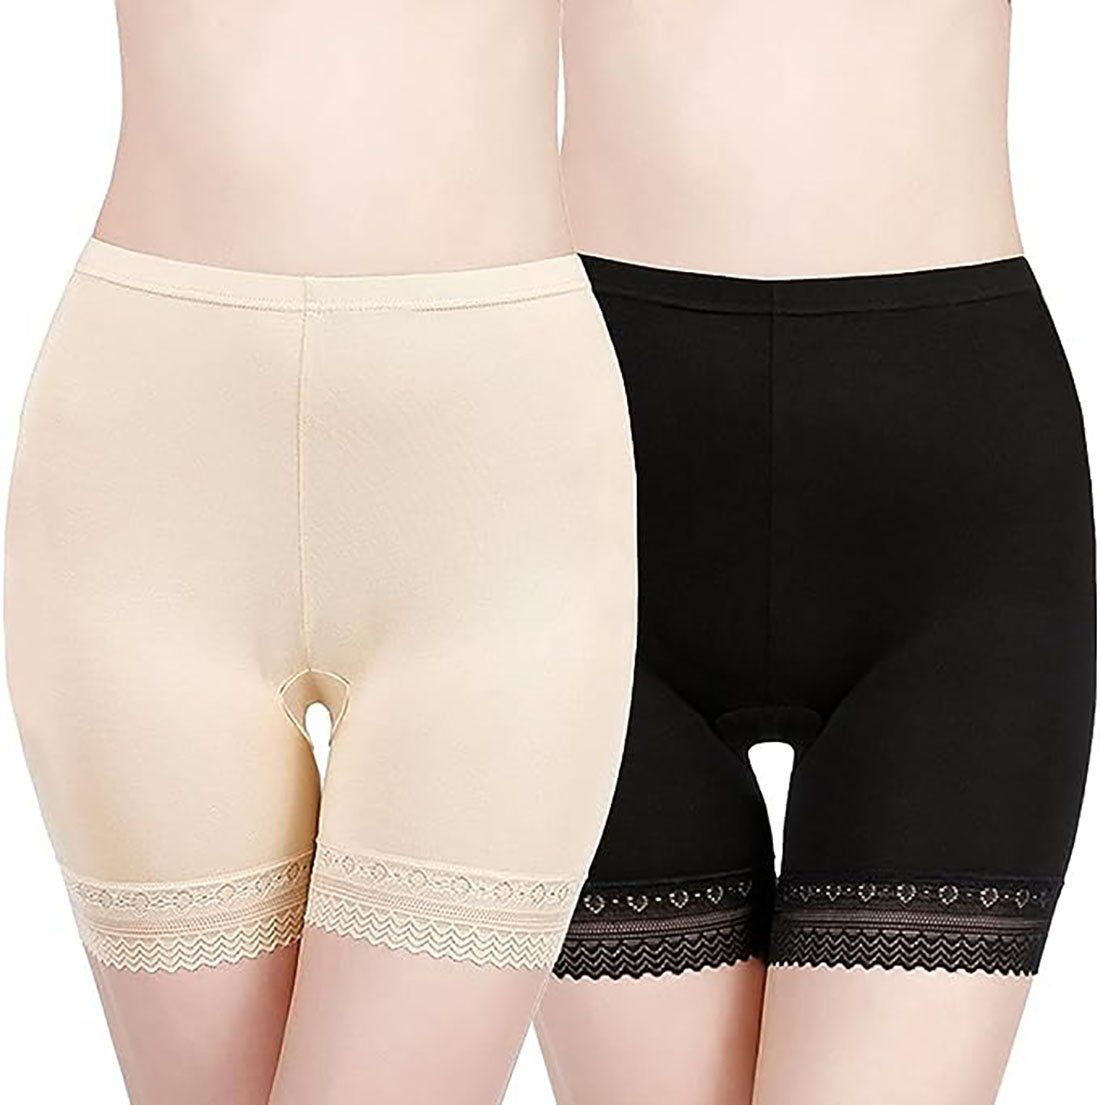 CTGtree Yogashorts 2 Stück Baumwolle Panties Unterhosen Mädchen Damen Slipshorts